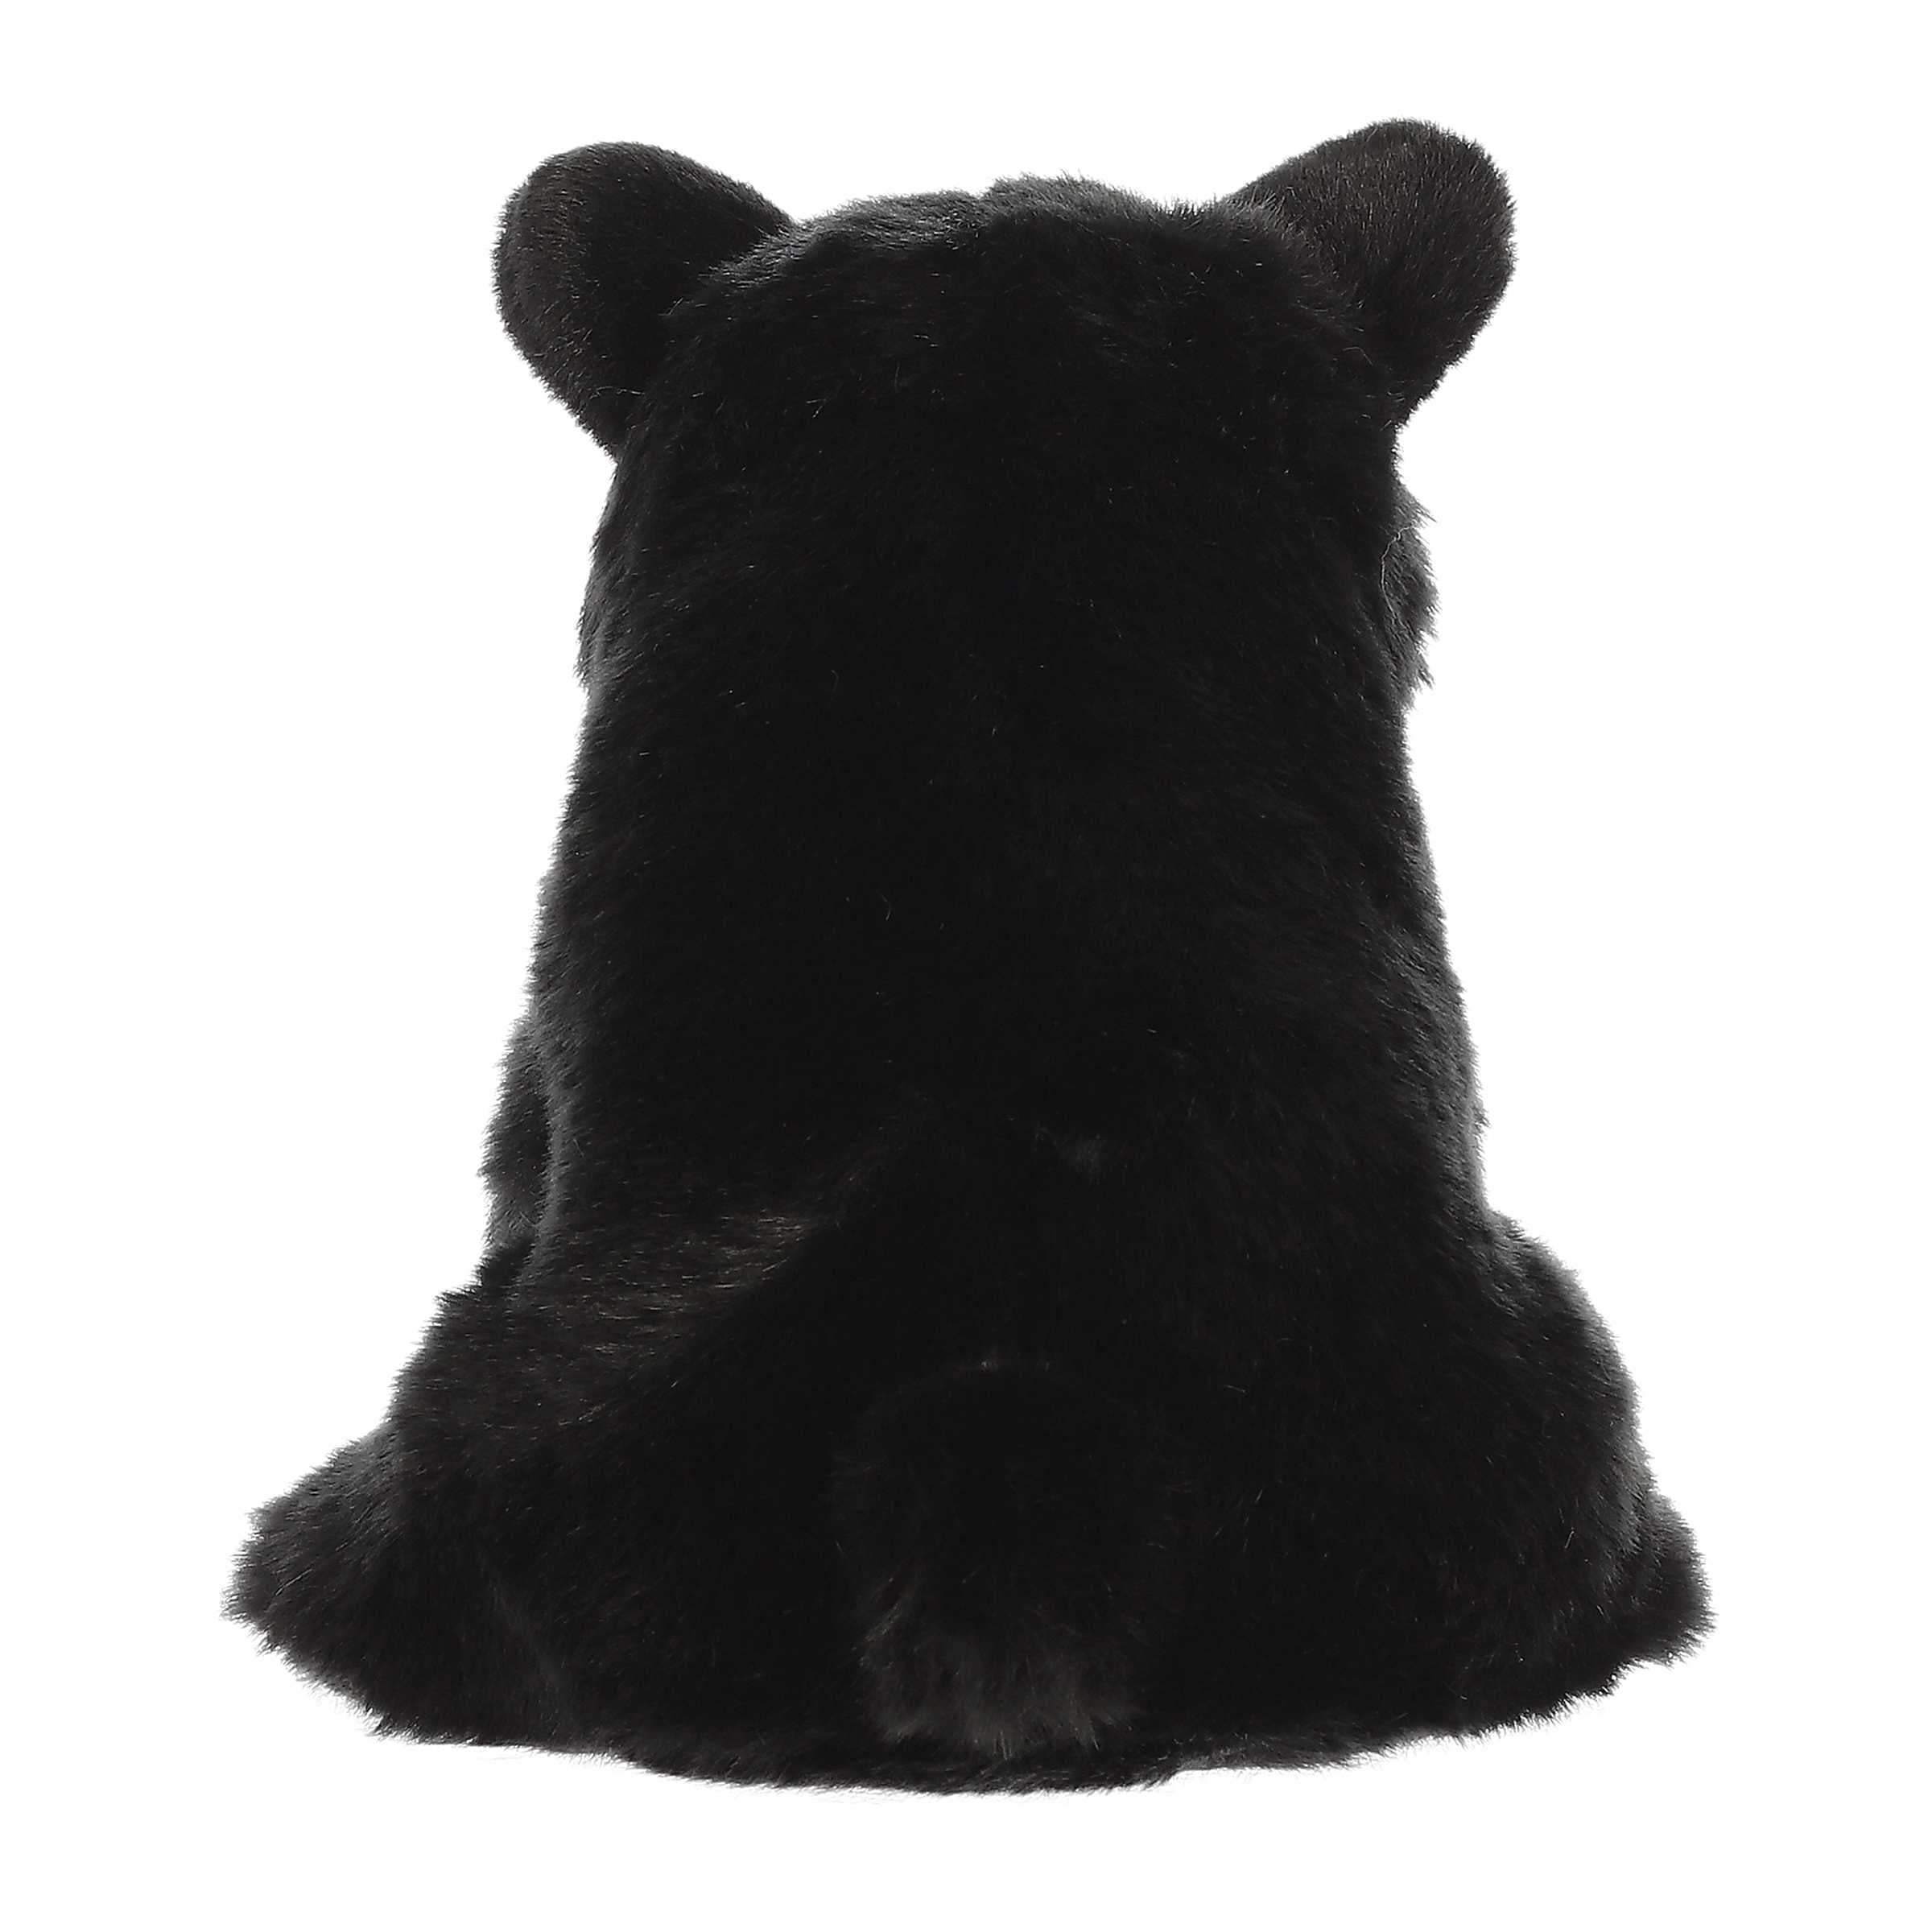 Aurora - Small Black Miyoni - 9 Black Bear - Adorable Stuffed